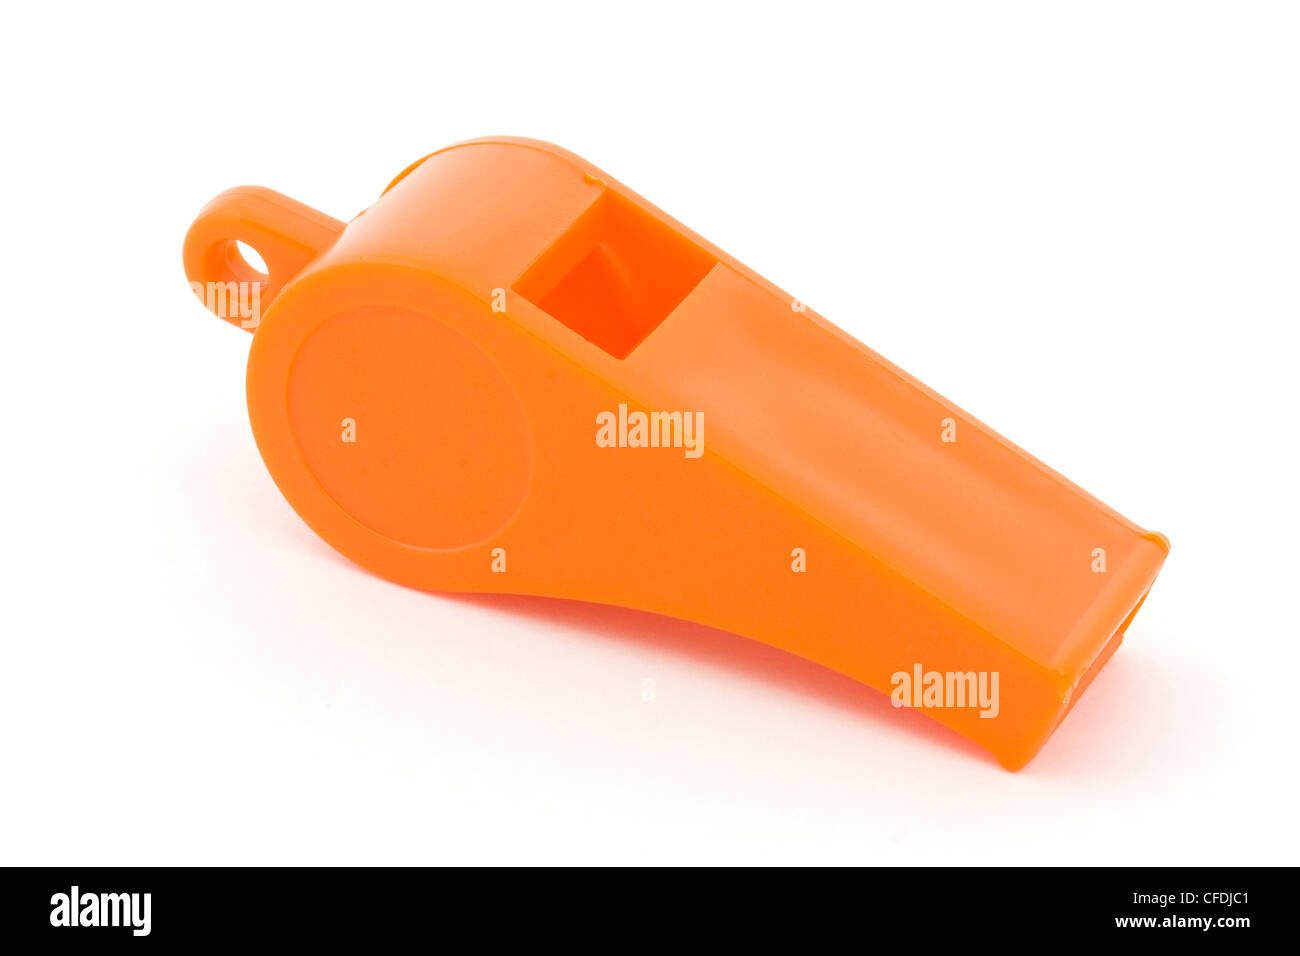 Silbato de plástico naranja sobre blanco Foto de stock